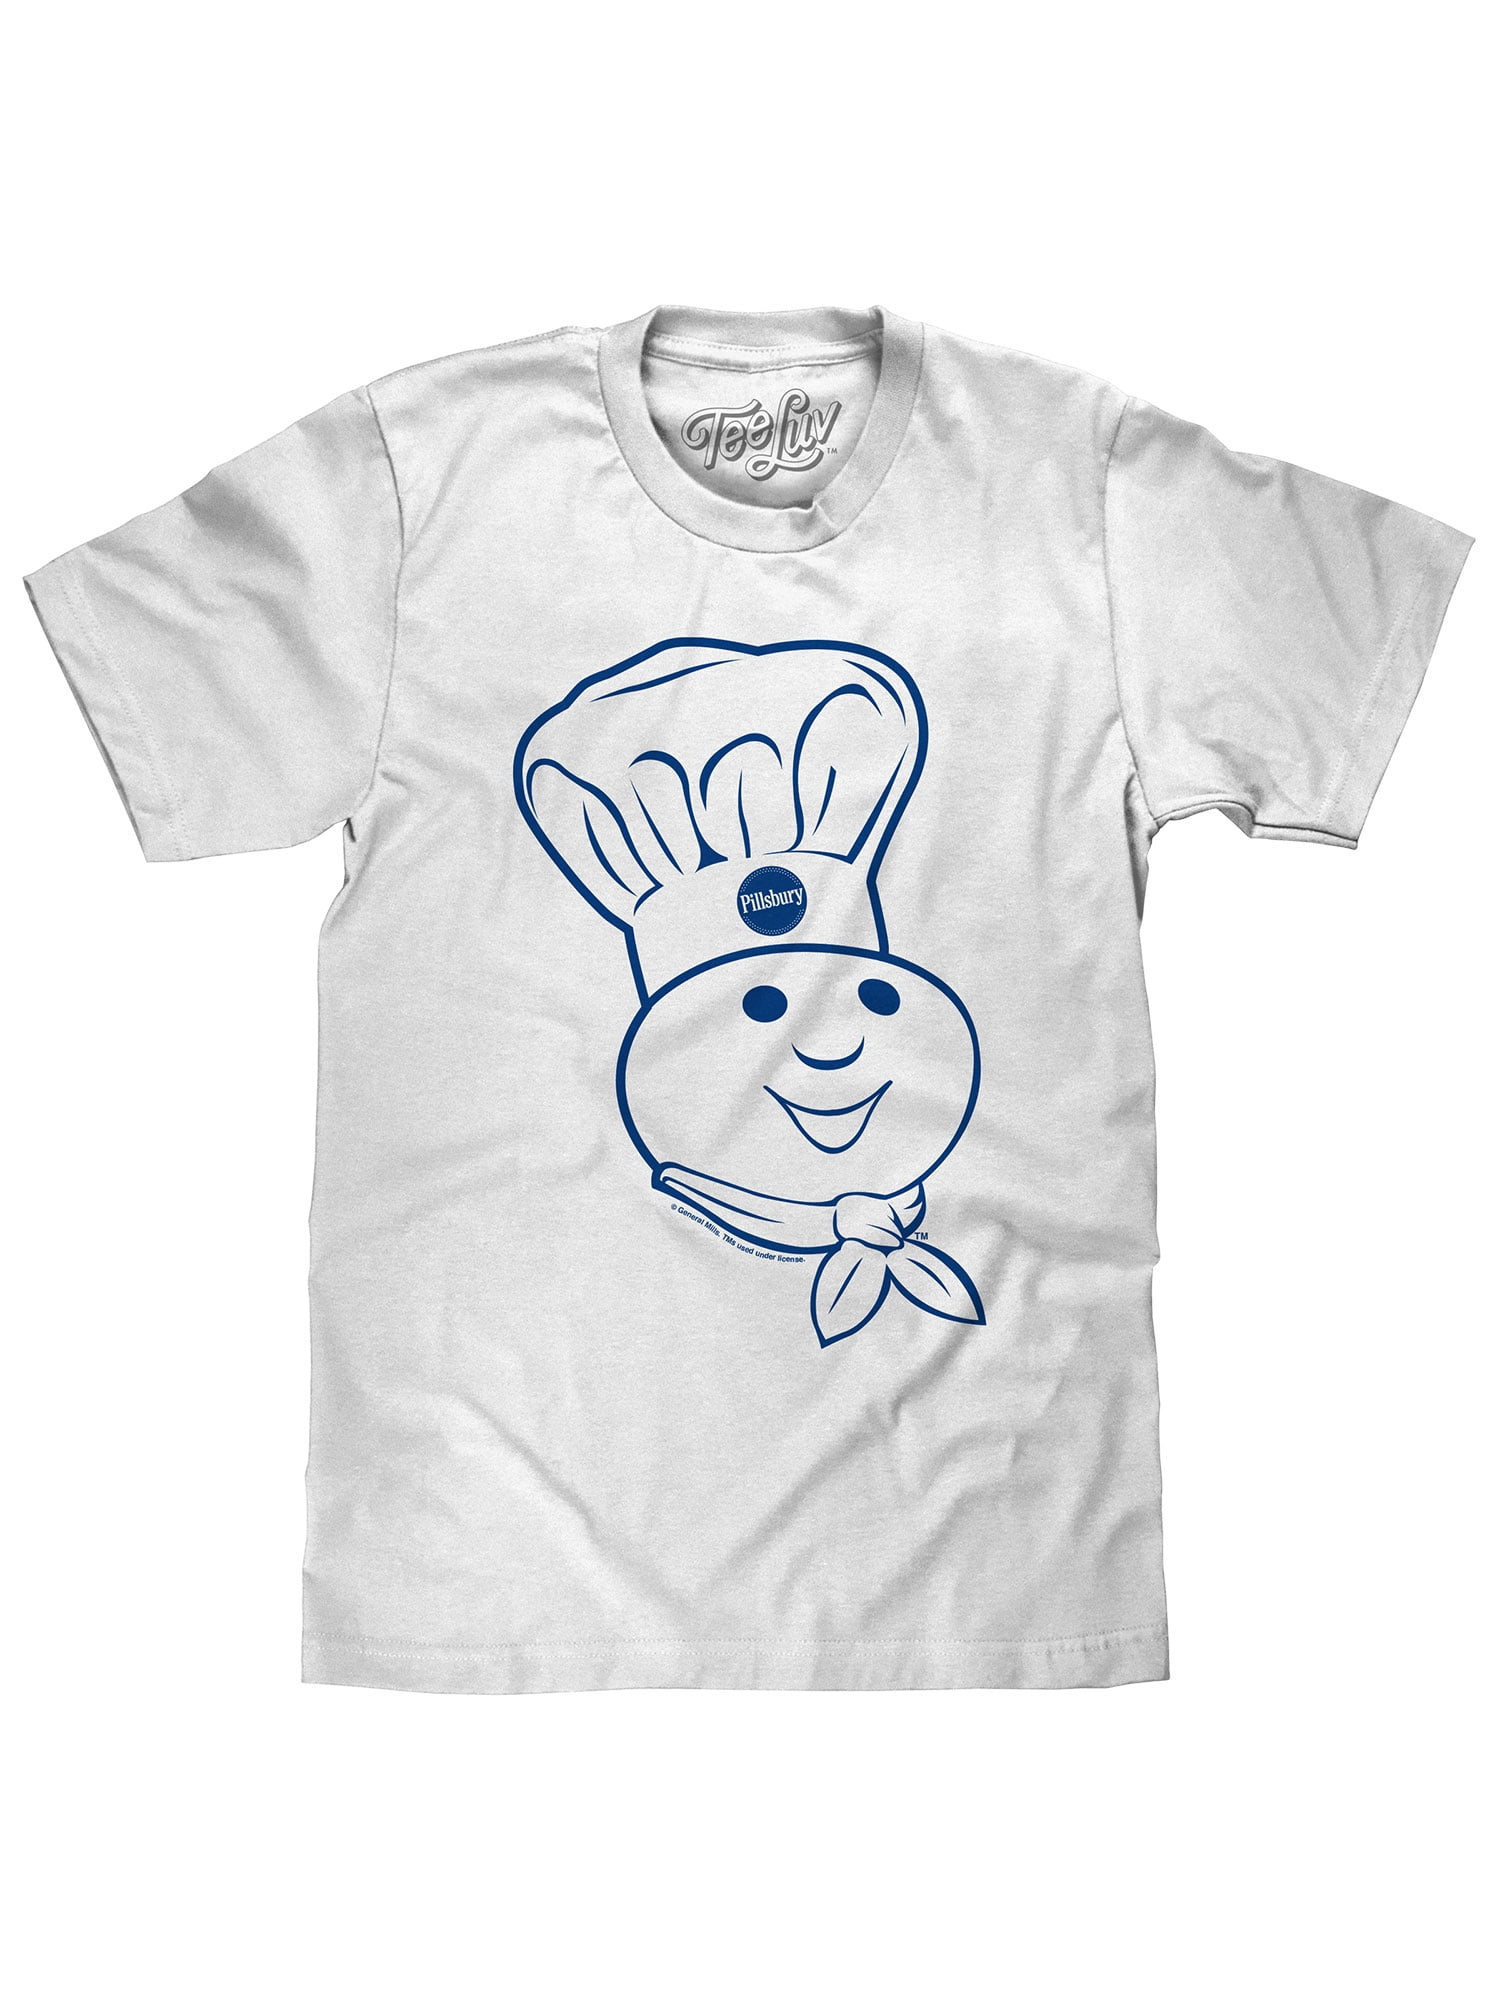 Vintage Pillsbury Doughboy Tee Shirt Celebration 